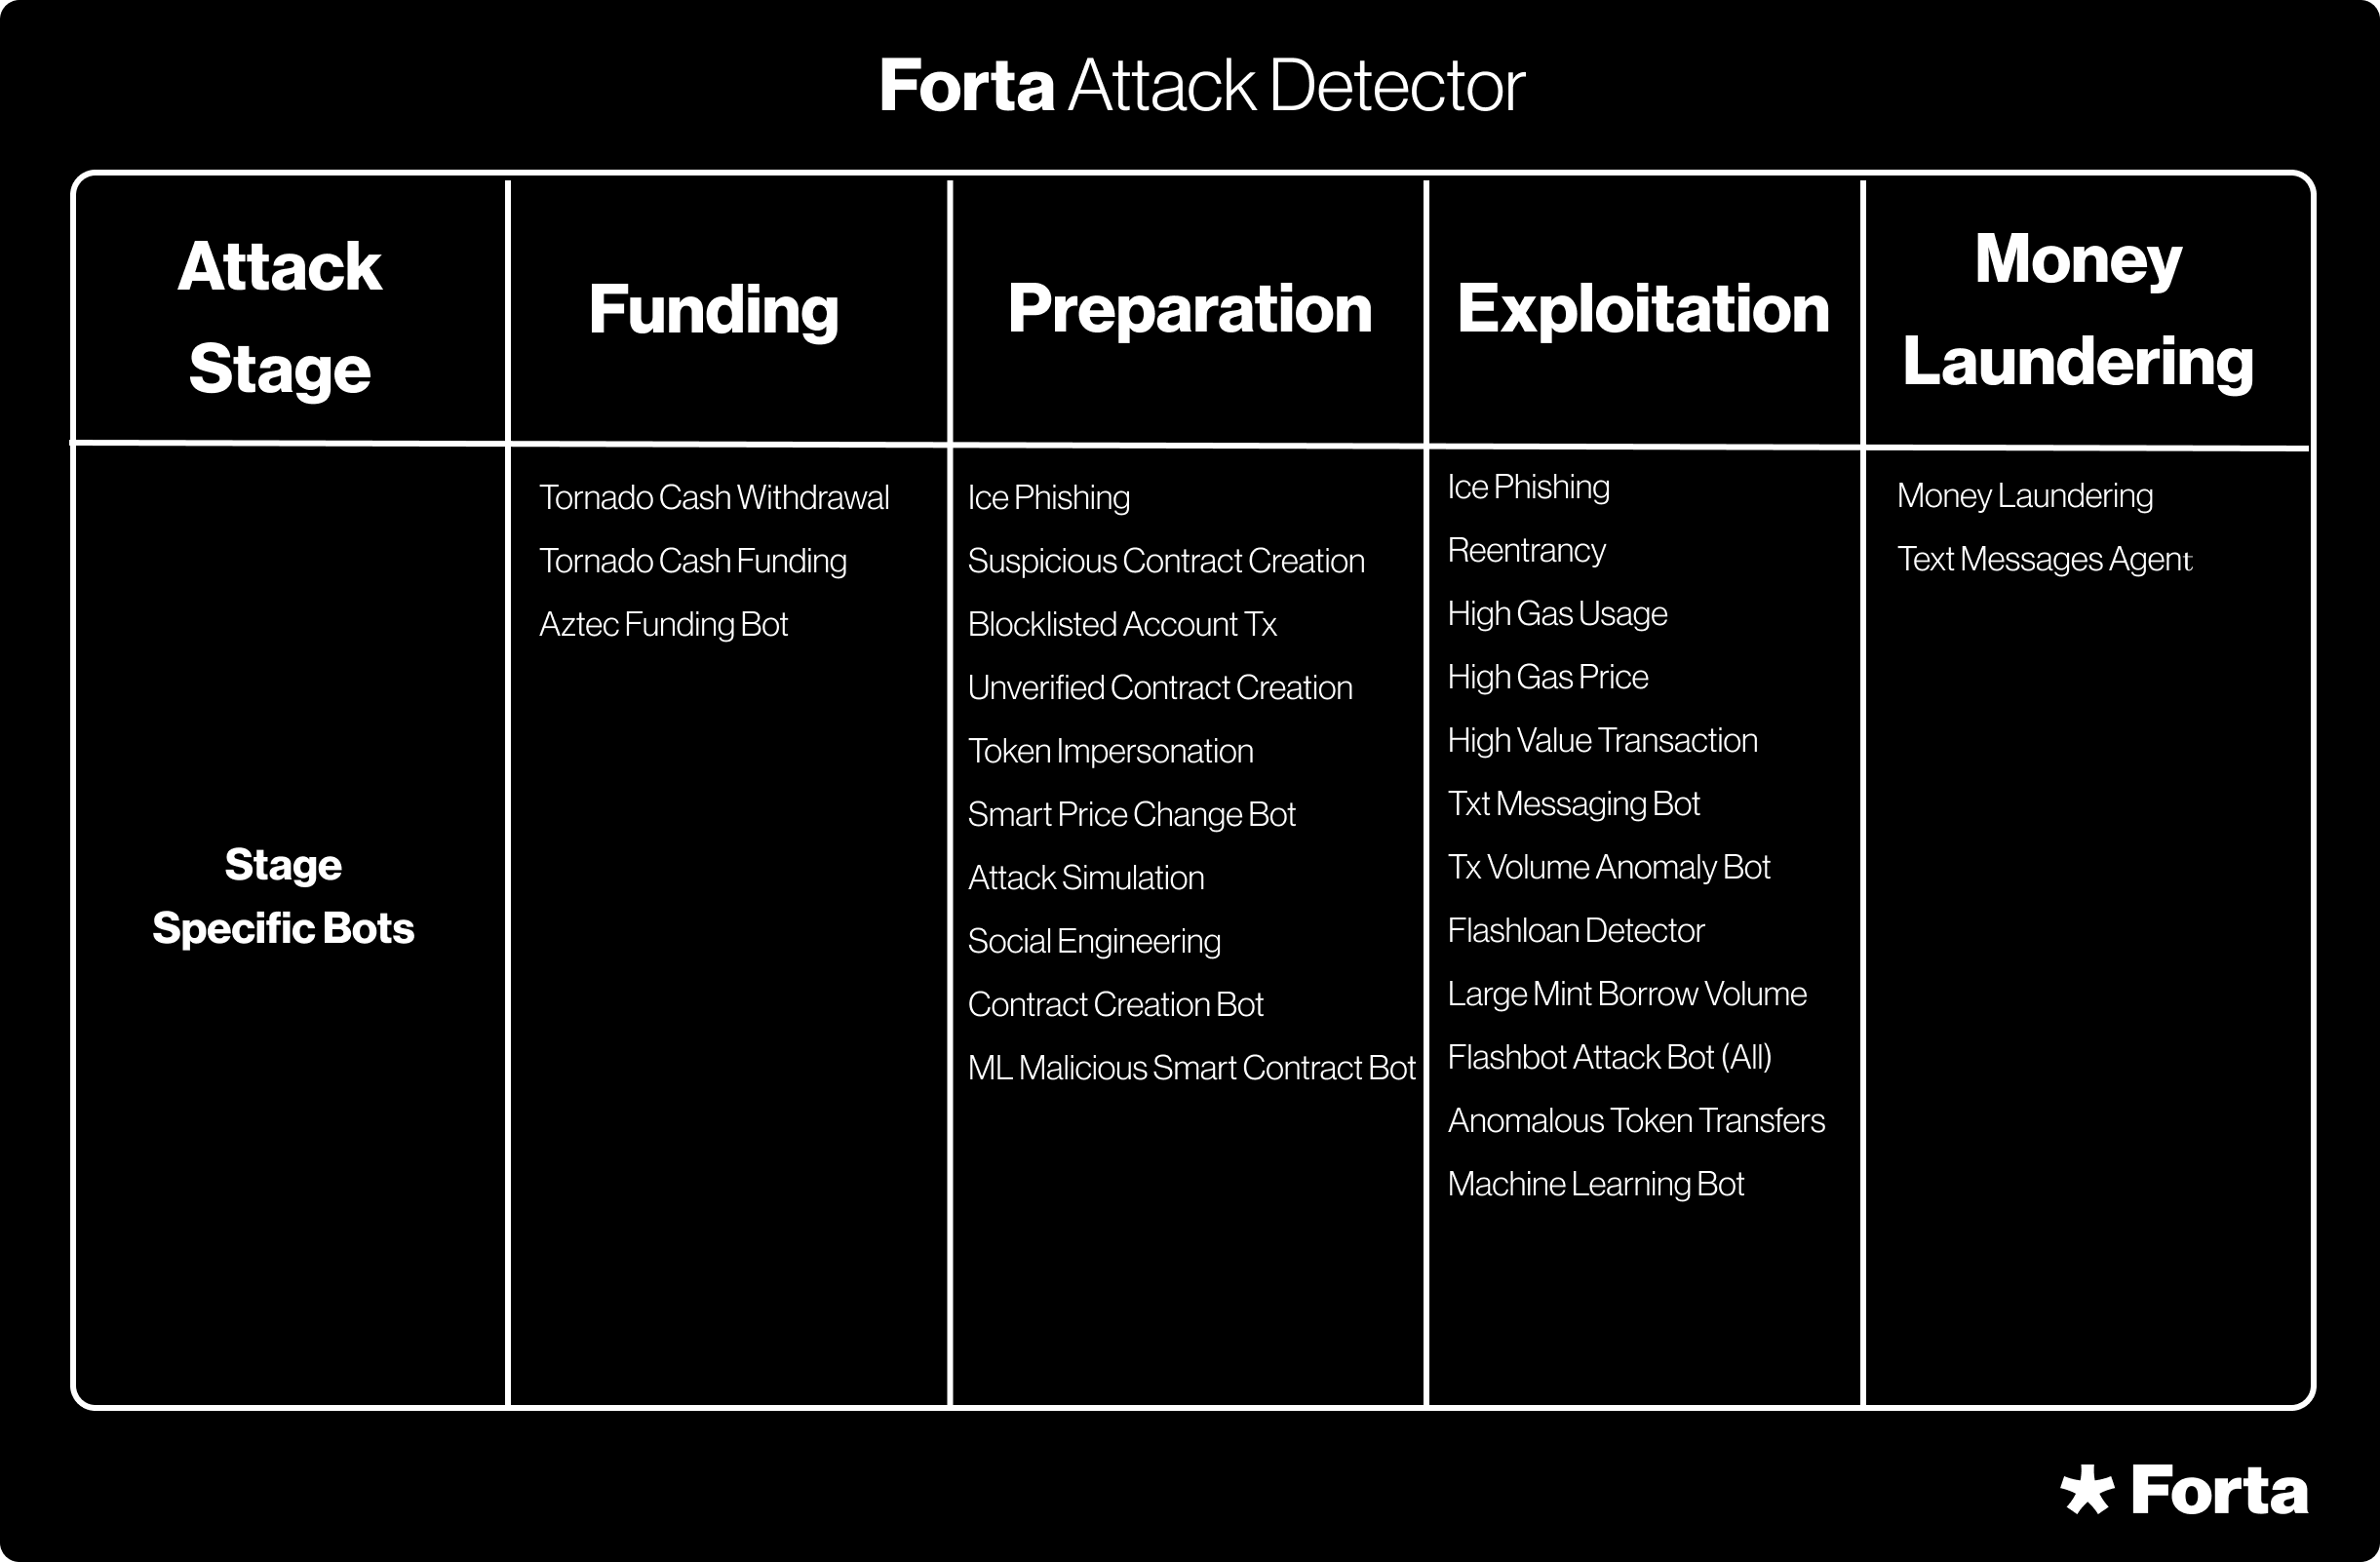 Forta Attack Detector